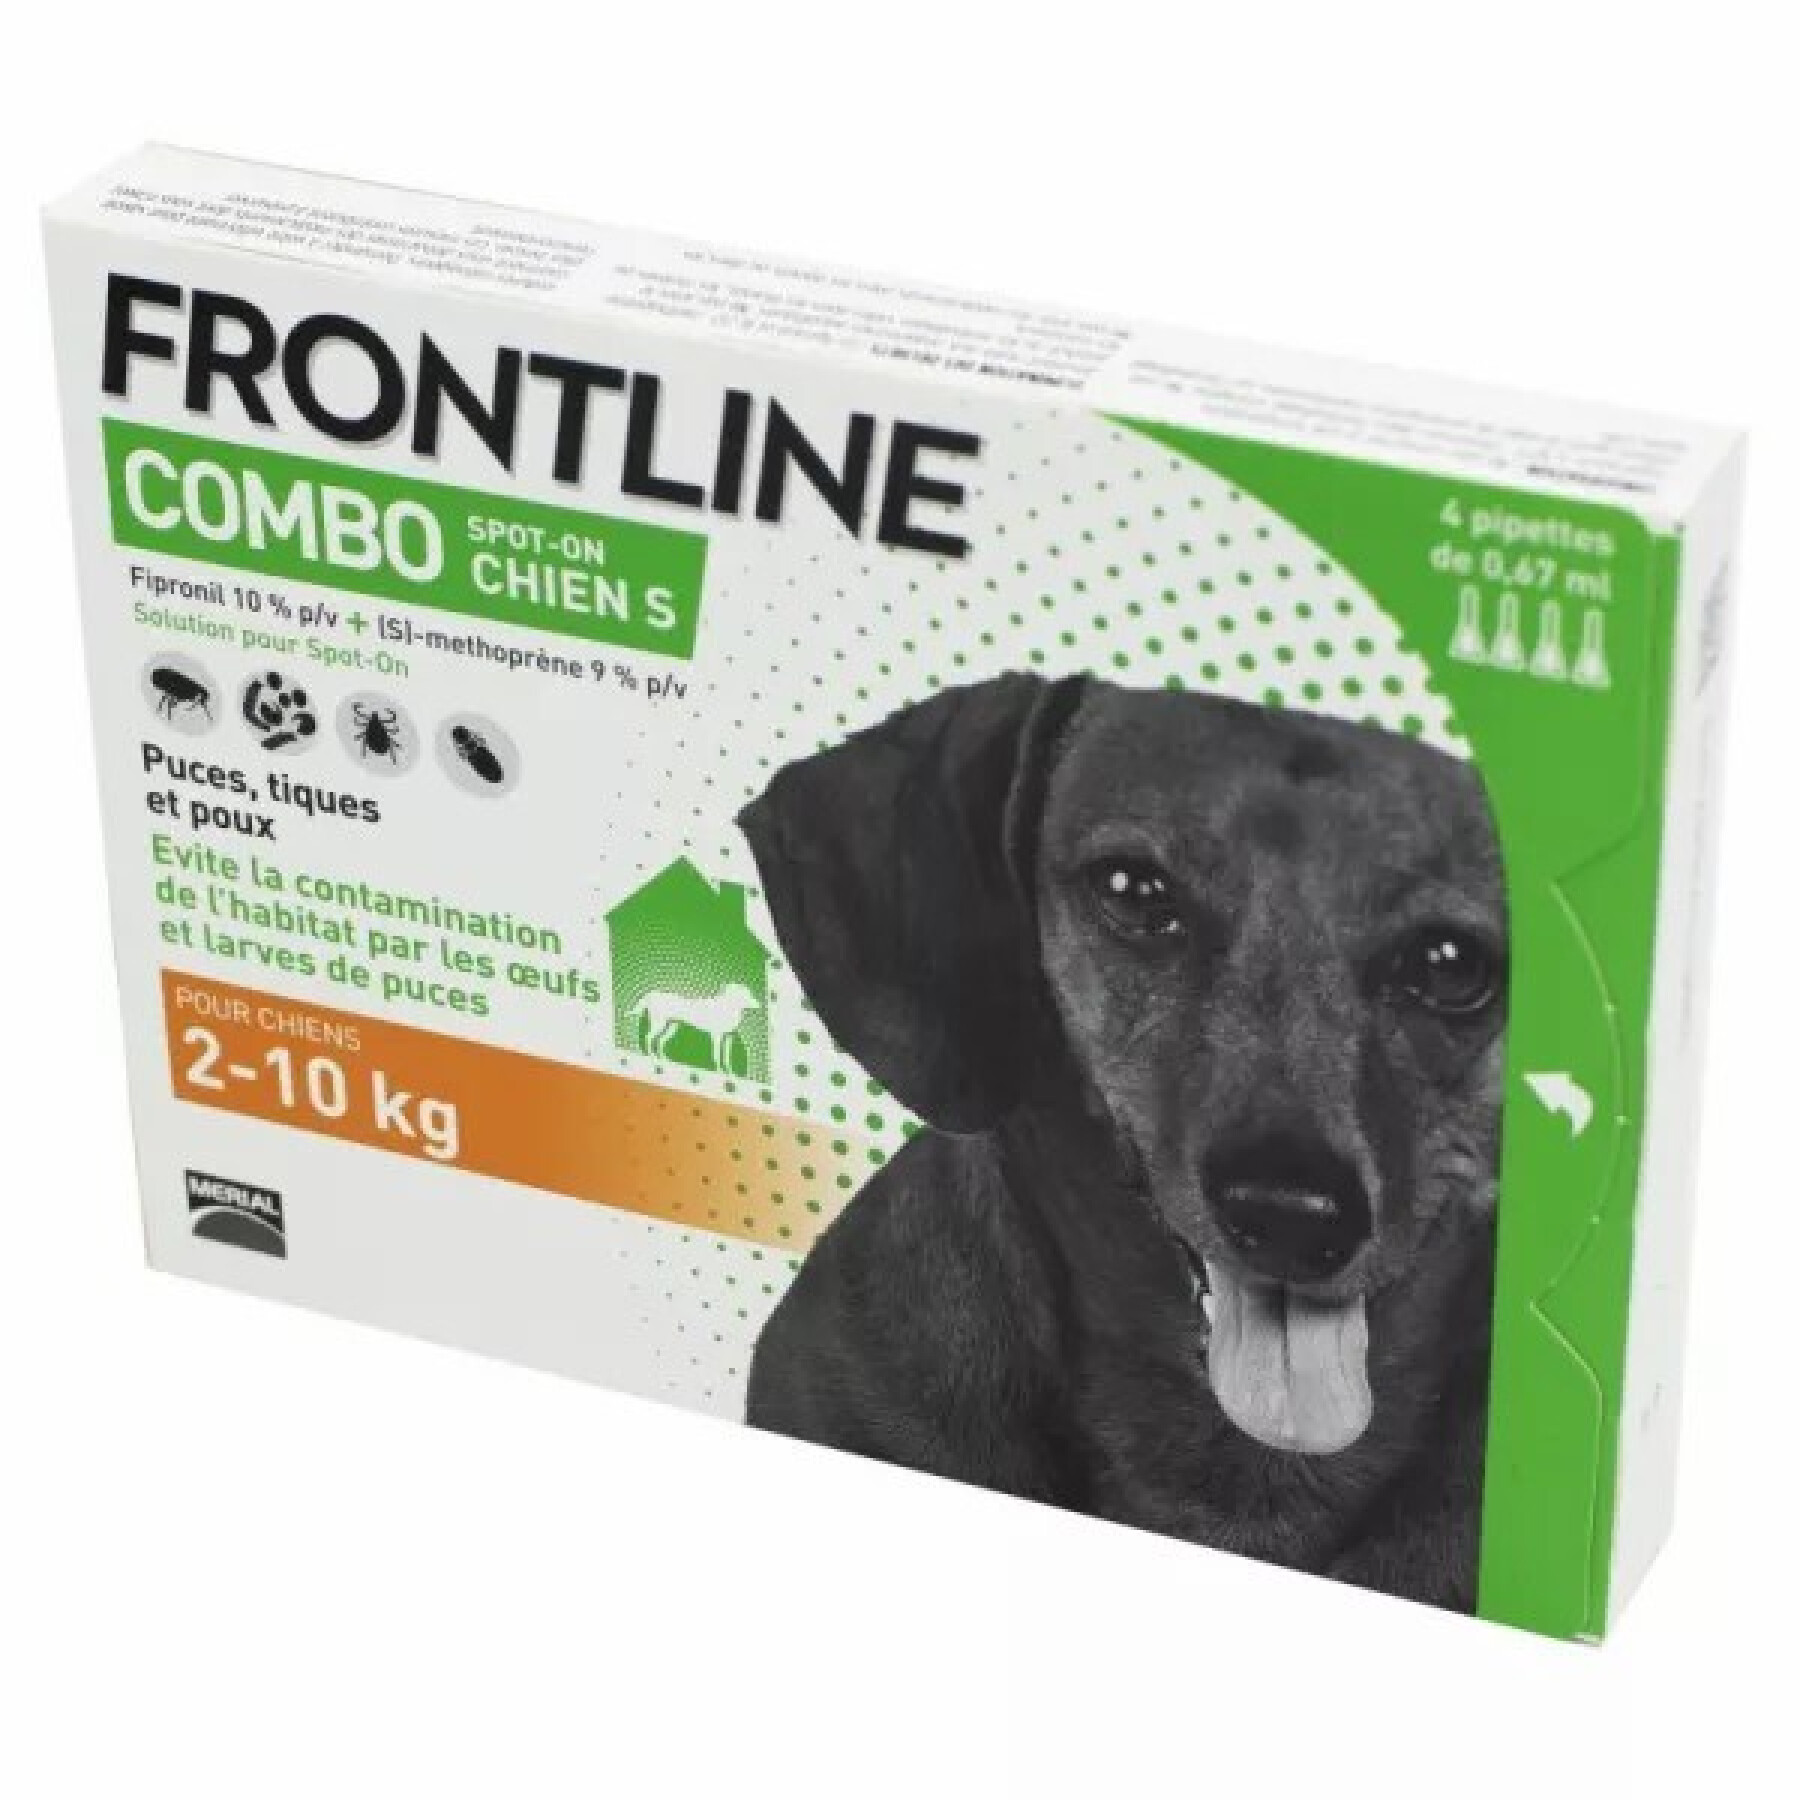 Pest control for dogs Frontline de 2/10 kg Combo Spot On (x6)